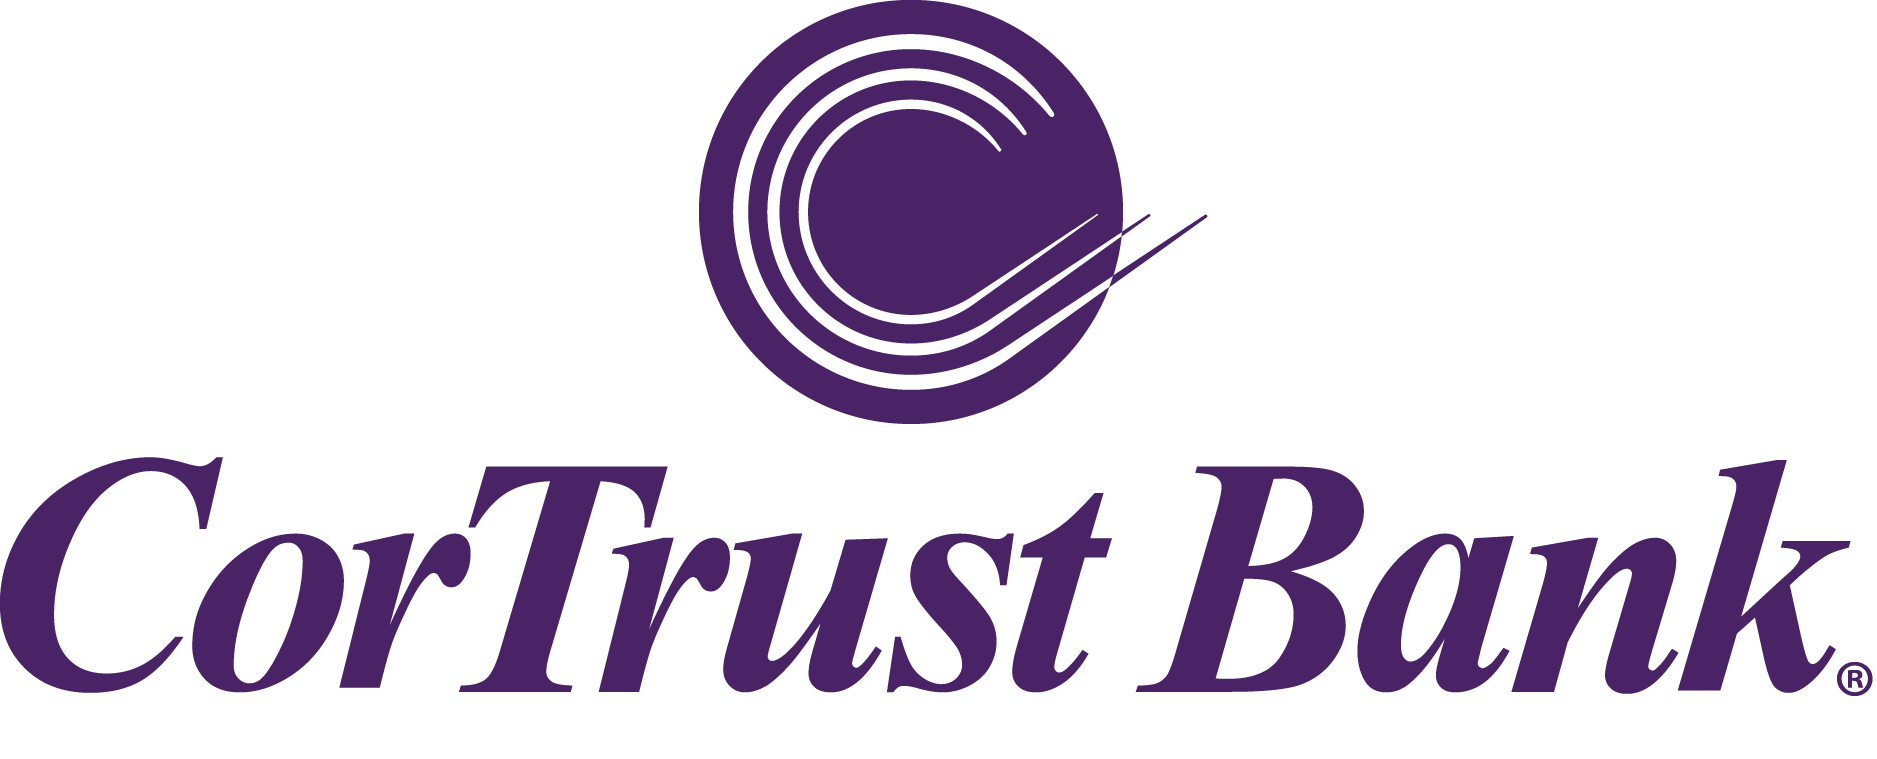 cortrust bank logo